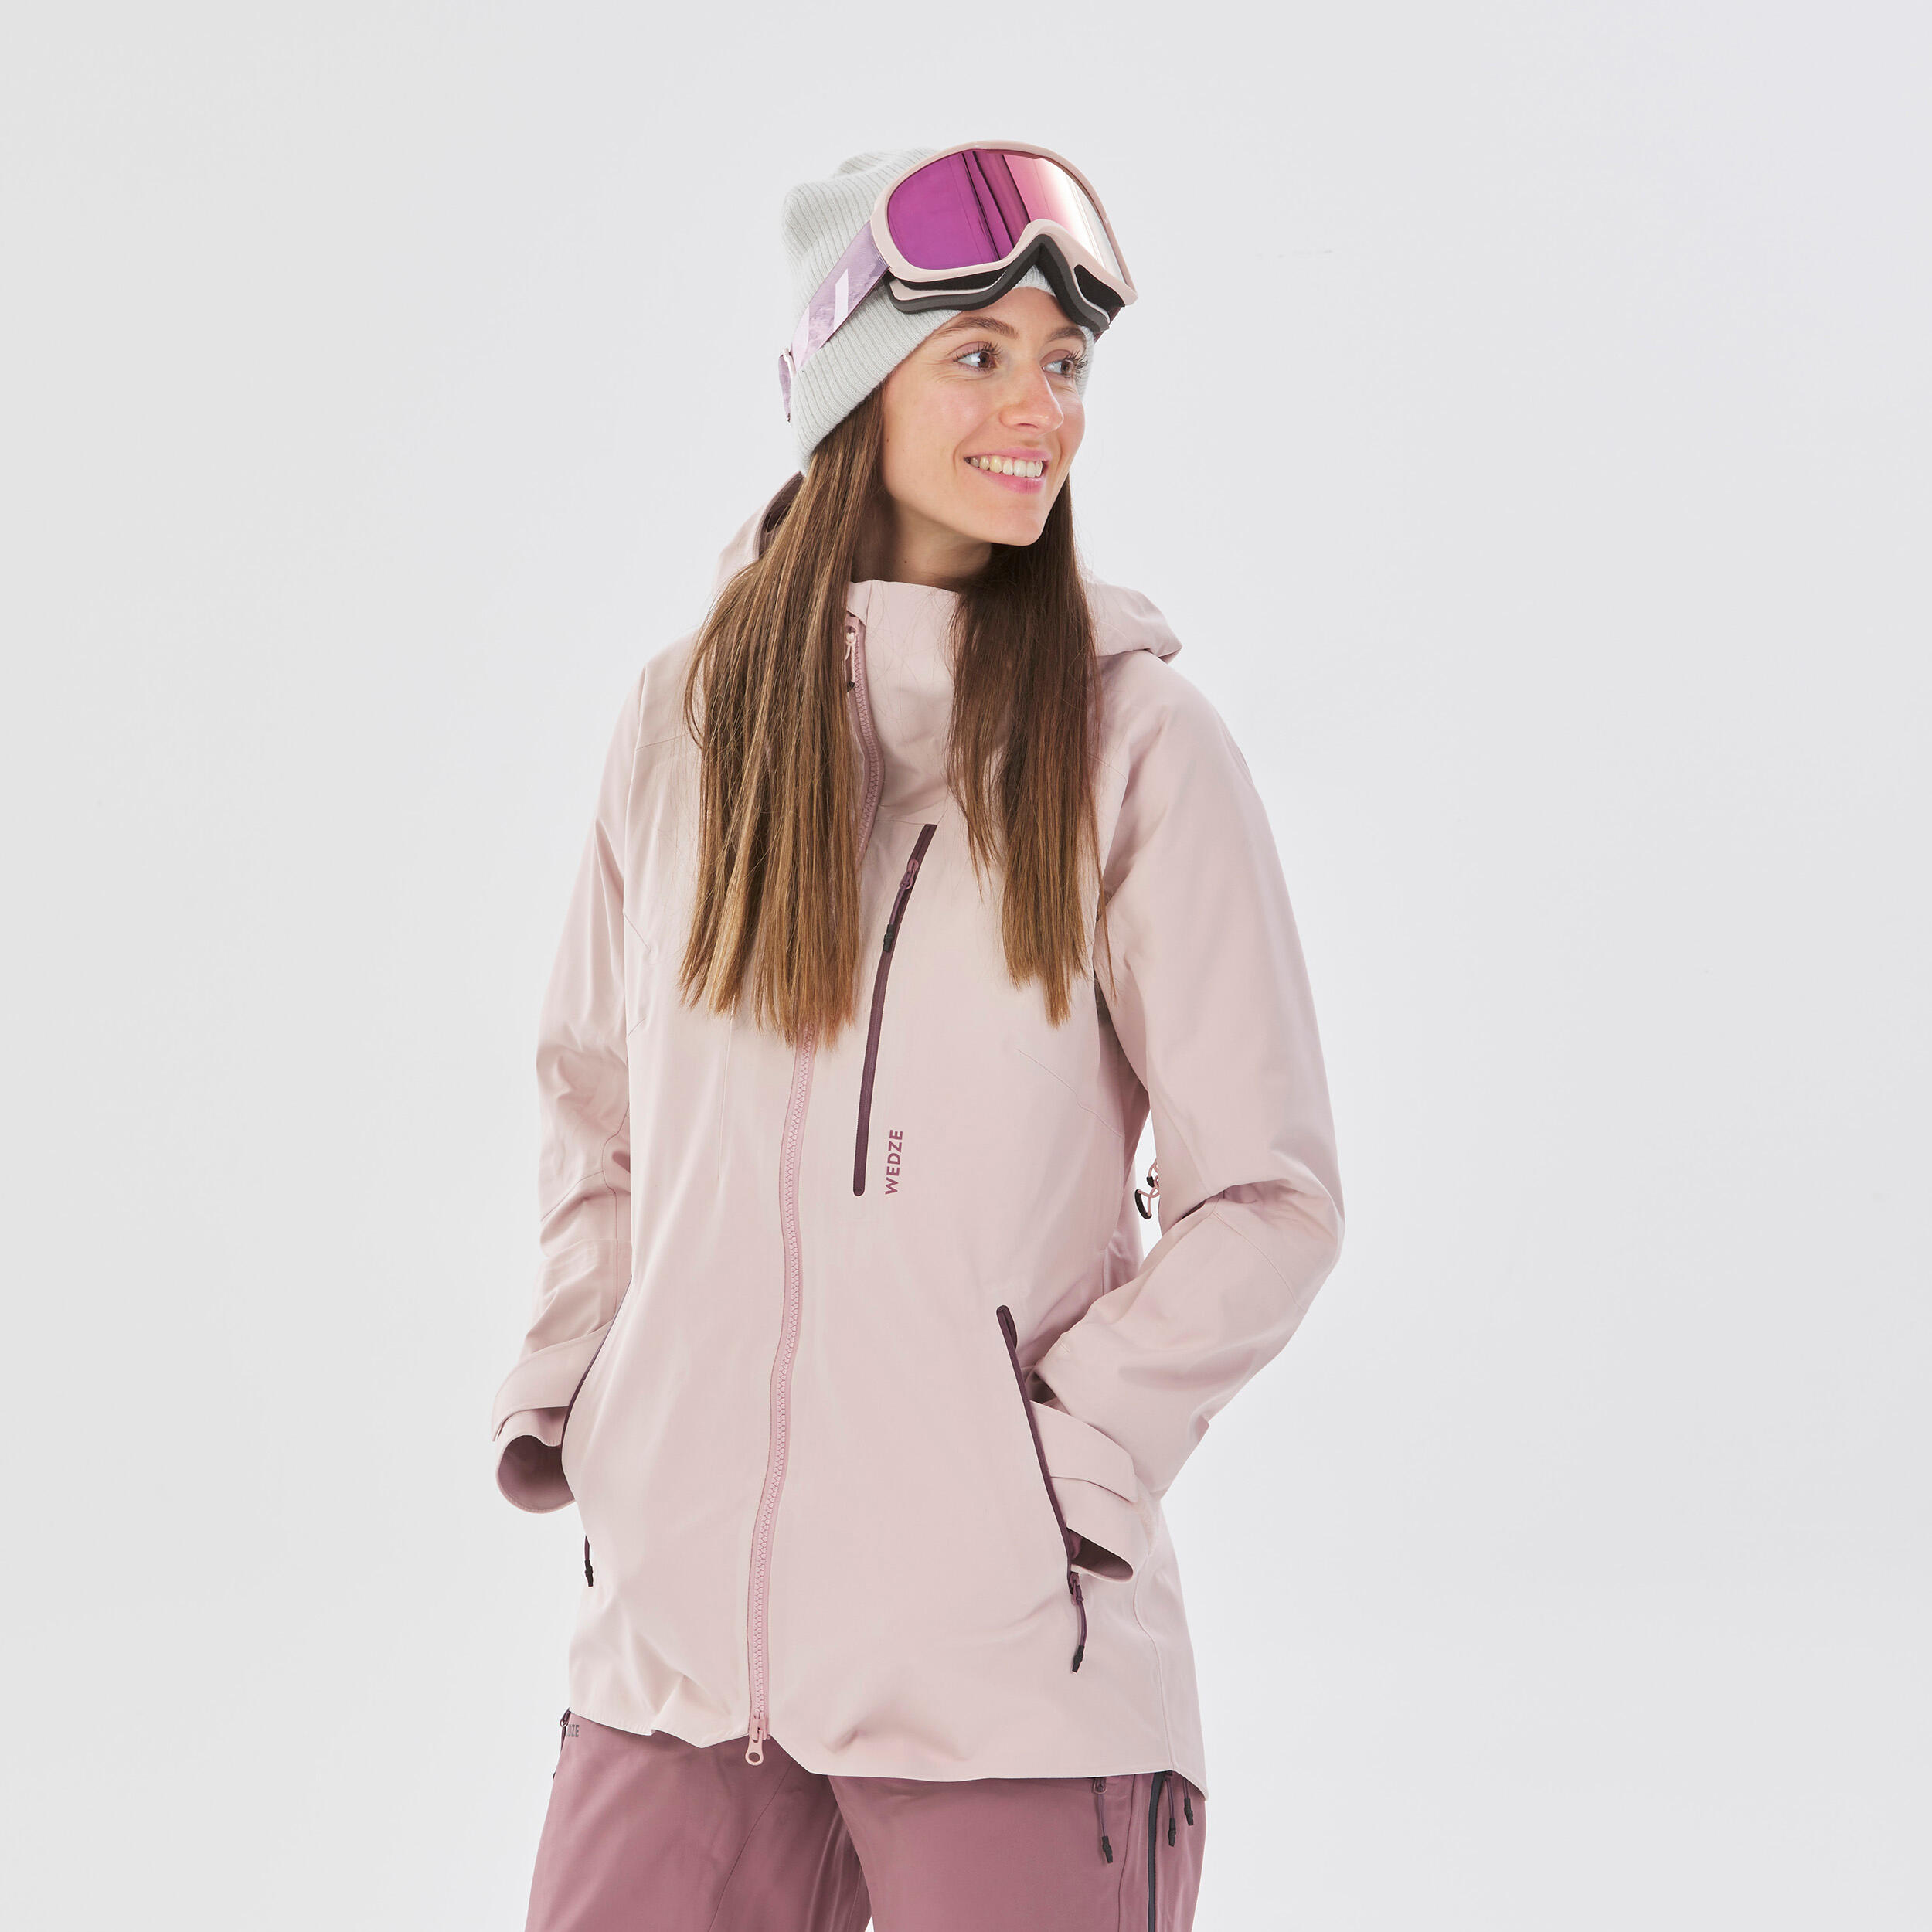 Unisex Fluorescent Pink Ski Jacket For Men Women Windproof